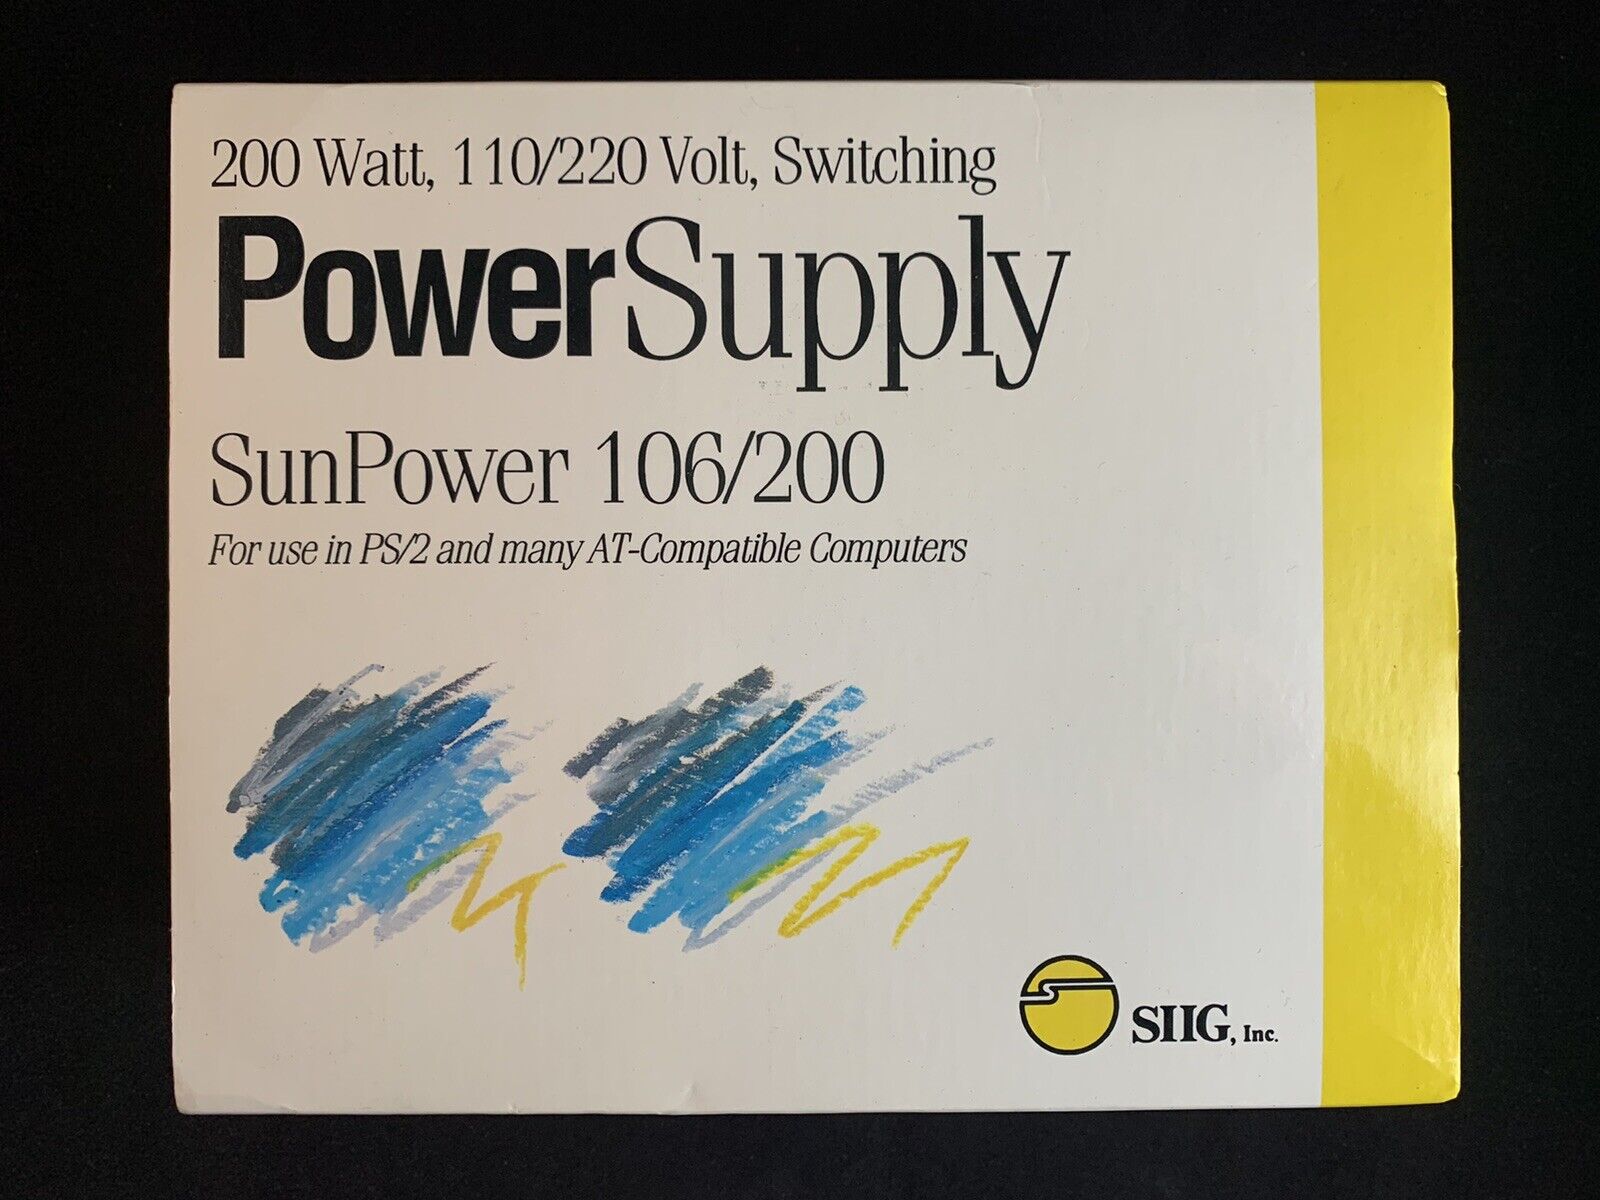 SunPower 106/200 - 200 Watt 110/220 Volt Switching Power Supply by SIIG Inc.